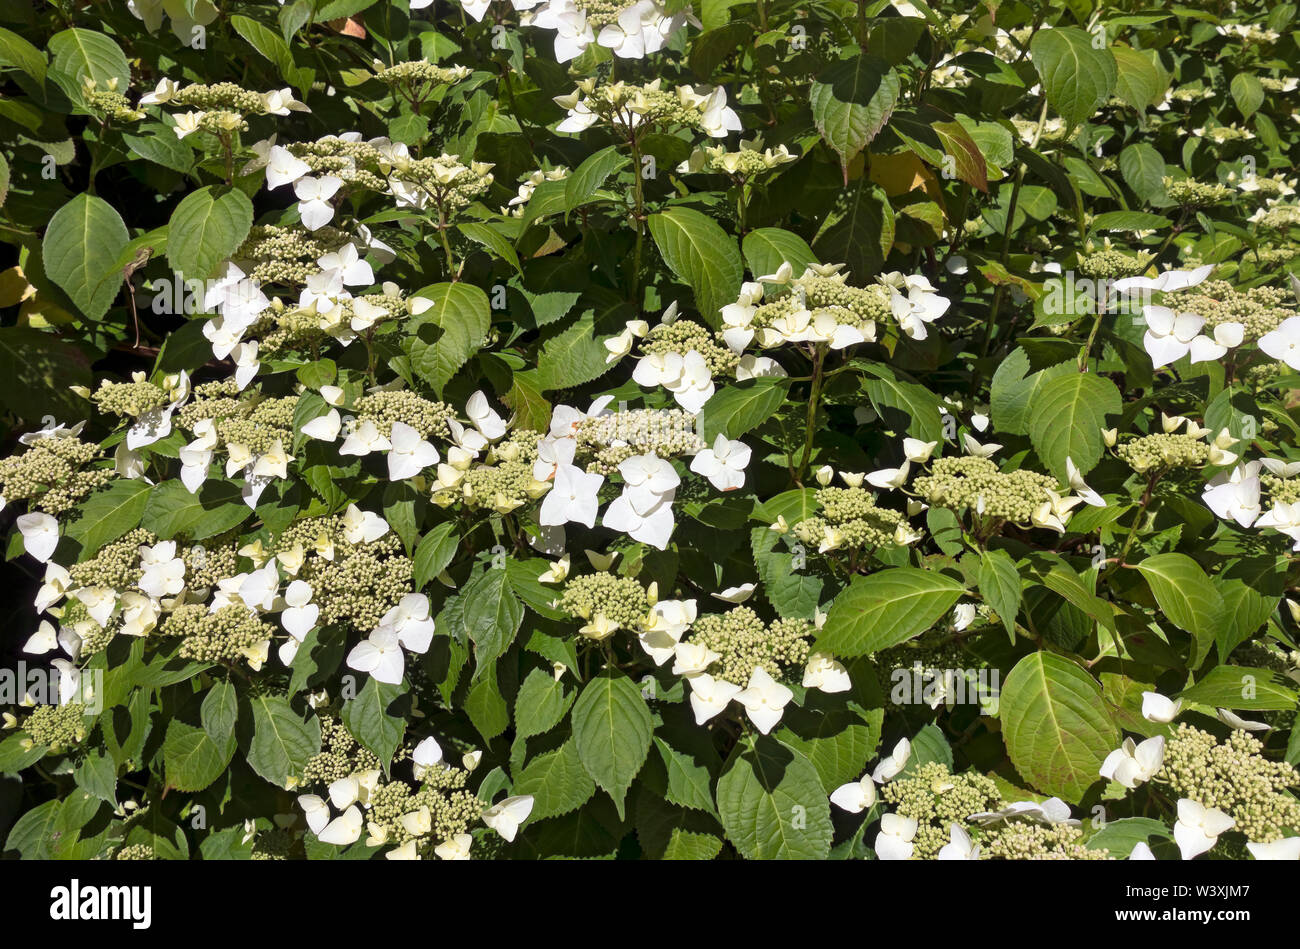 Nahaufnahme der Creme Lacecap Hortensia Blumen Blume (Hortensia macrophylla normalis) im Sommer England Großbritannien Großbritannien GB Großbritannien Stockfoto